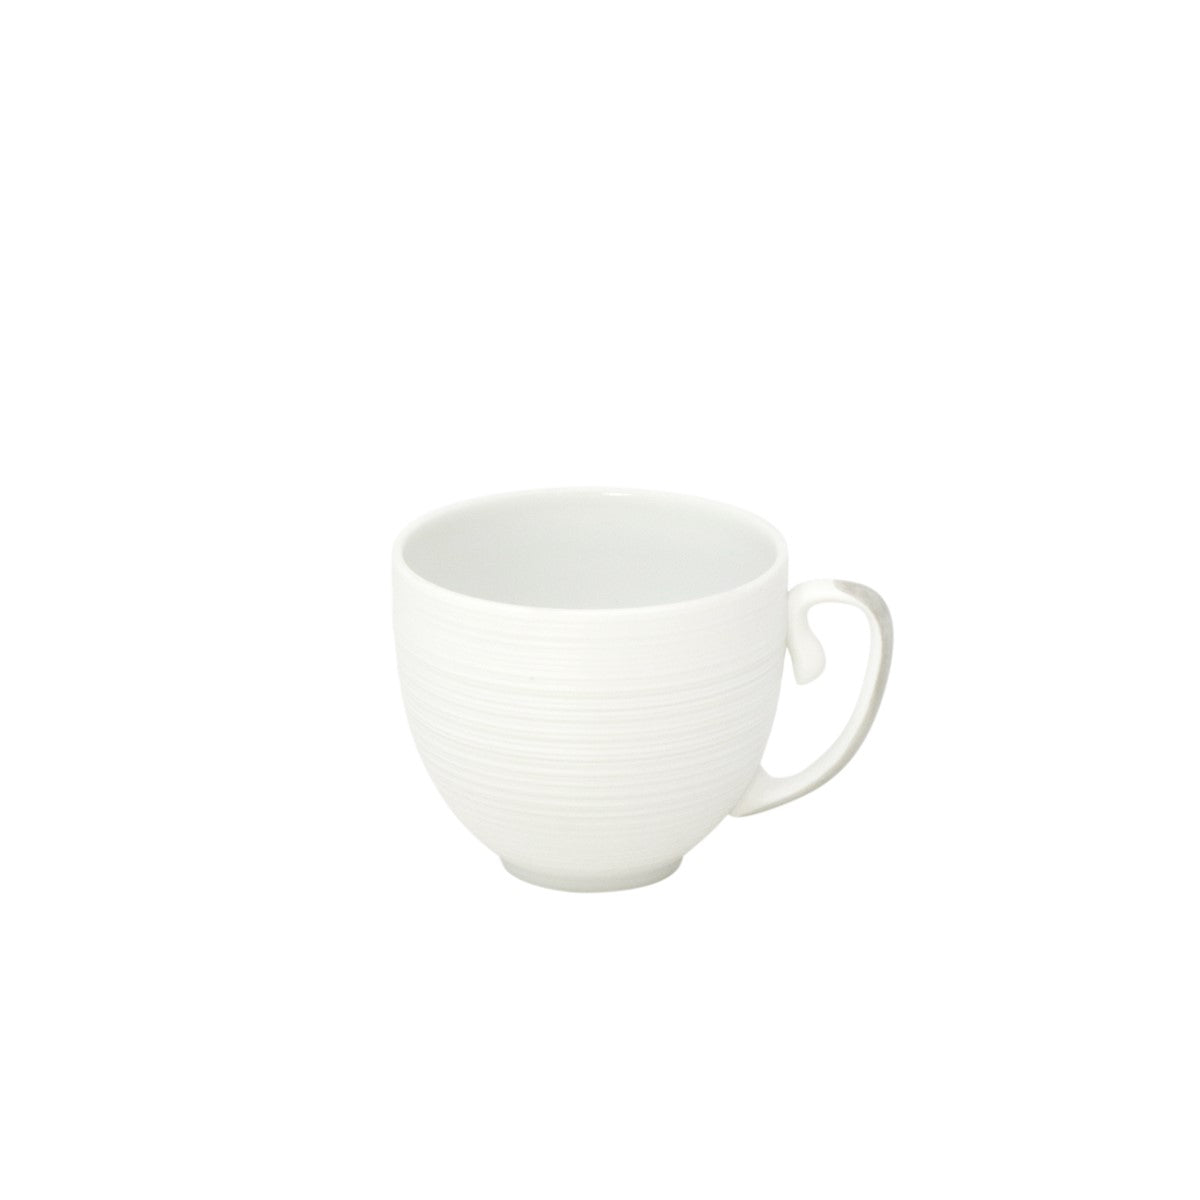 HEMISPHERE Grey Striped - Coffee set (cup & saucer)